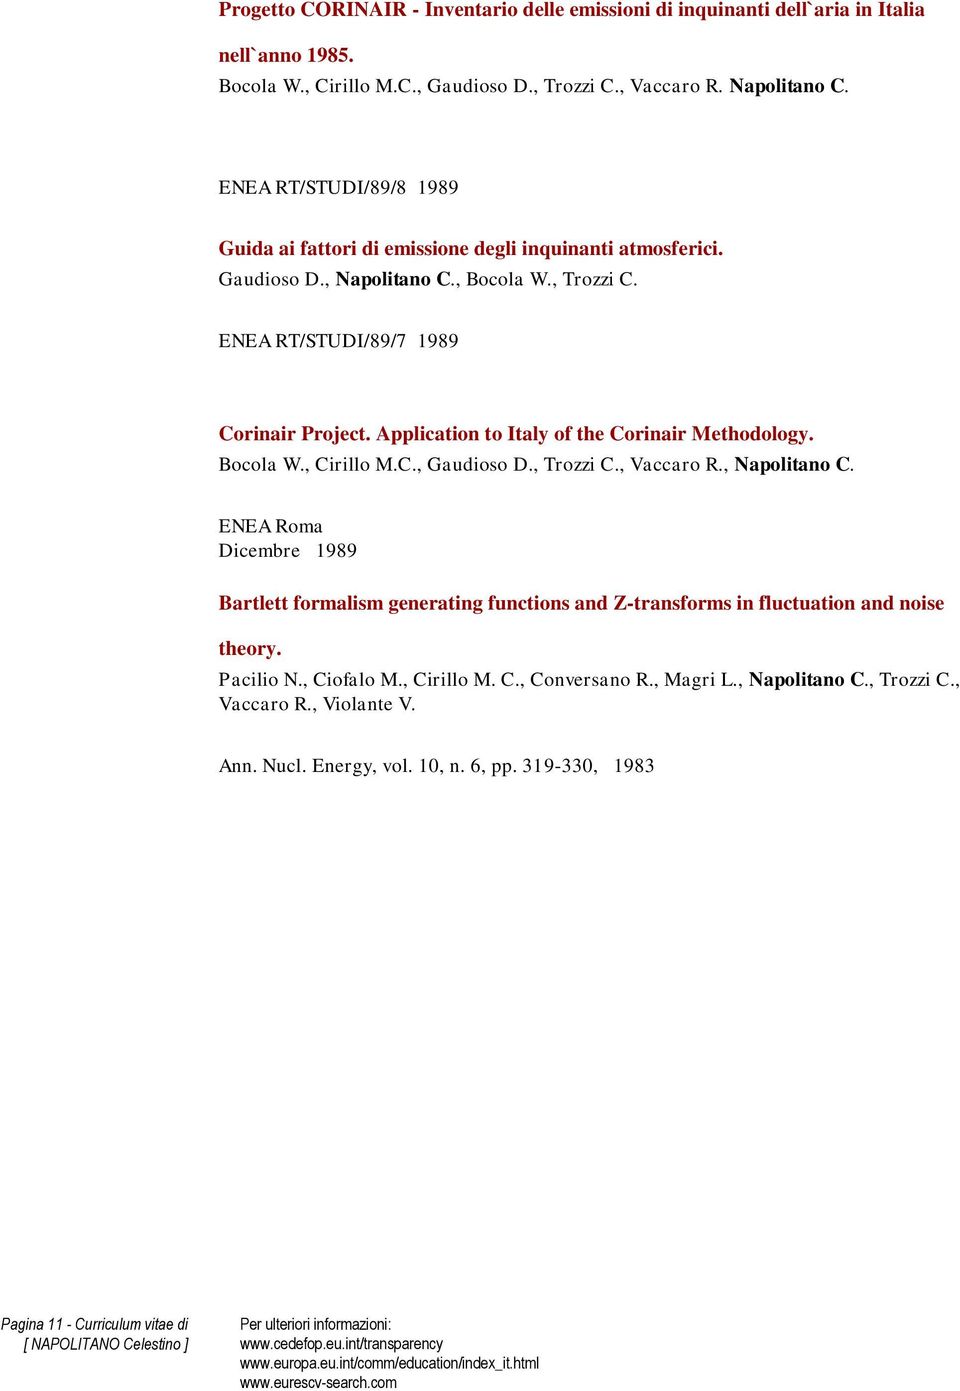 Application to Italy of the Corinair Methodology. Bocola W., Cirillo M.C., Gaudioso D., Trozzi C., Vaccaro R., Napolitano C.